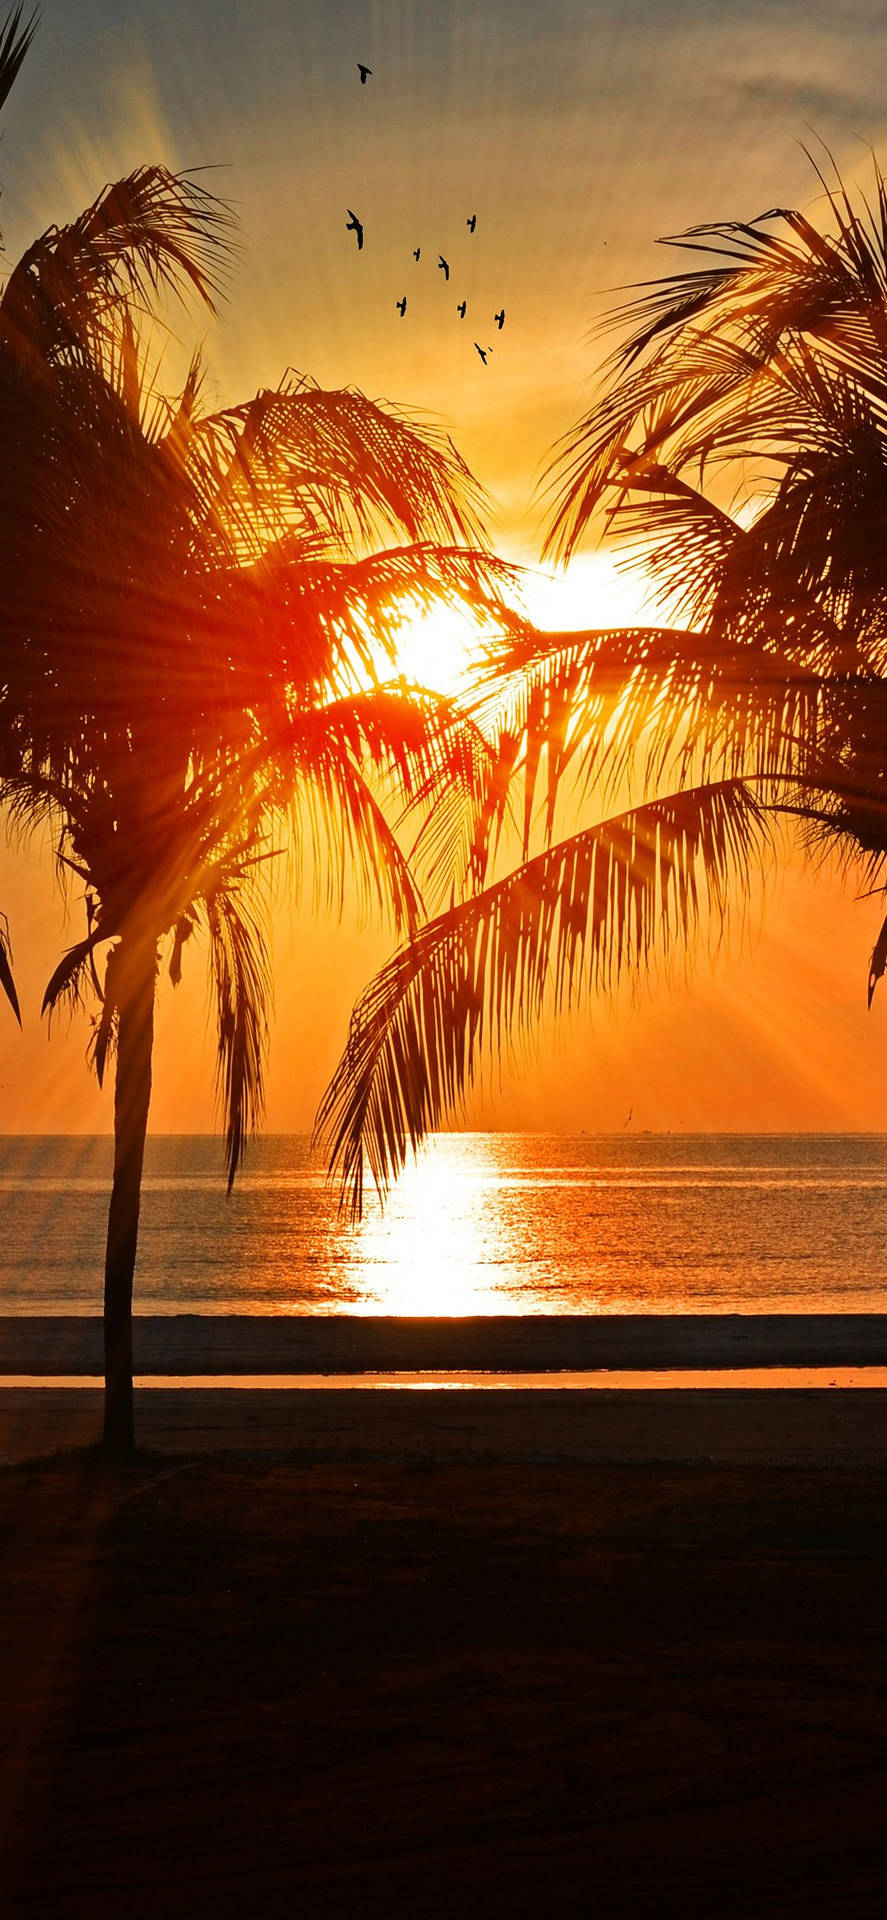 Sunset Ocean And Palms Wallpaper